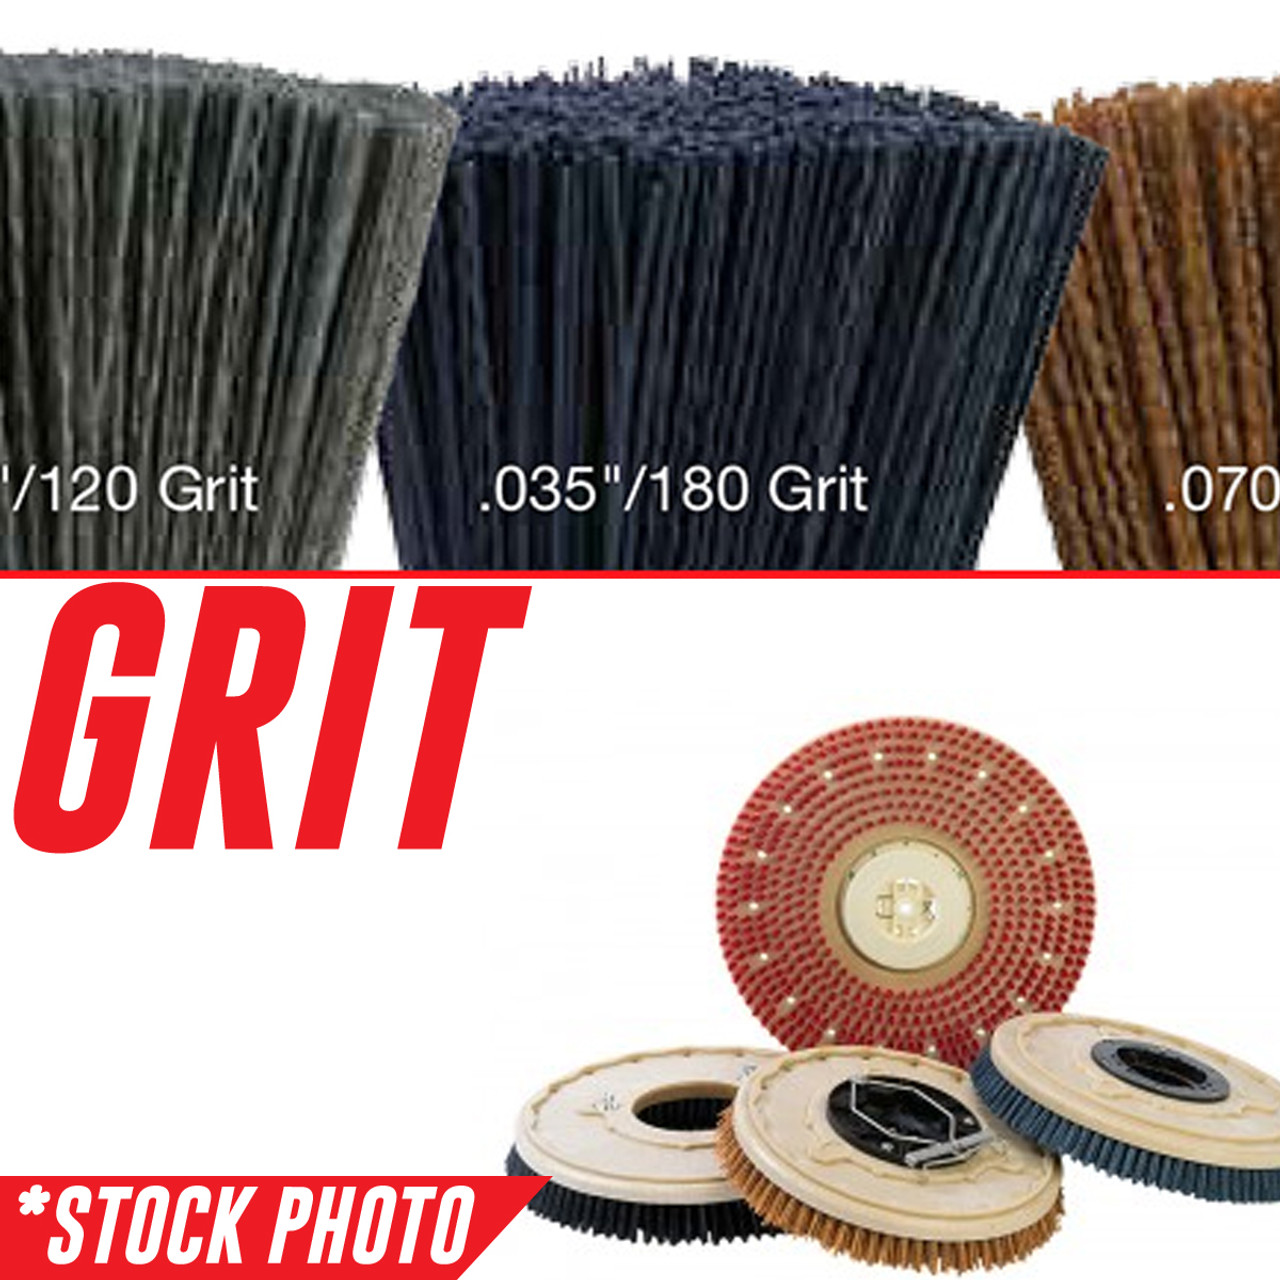 15-421C: 14" Rotary Brush .035"/180 Grit fits Tomcat Models 250-D, 290-D, 3000, GTX 30D, Magnum 30